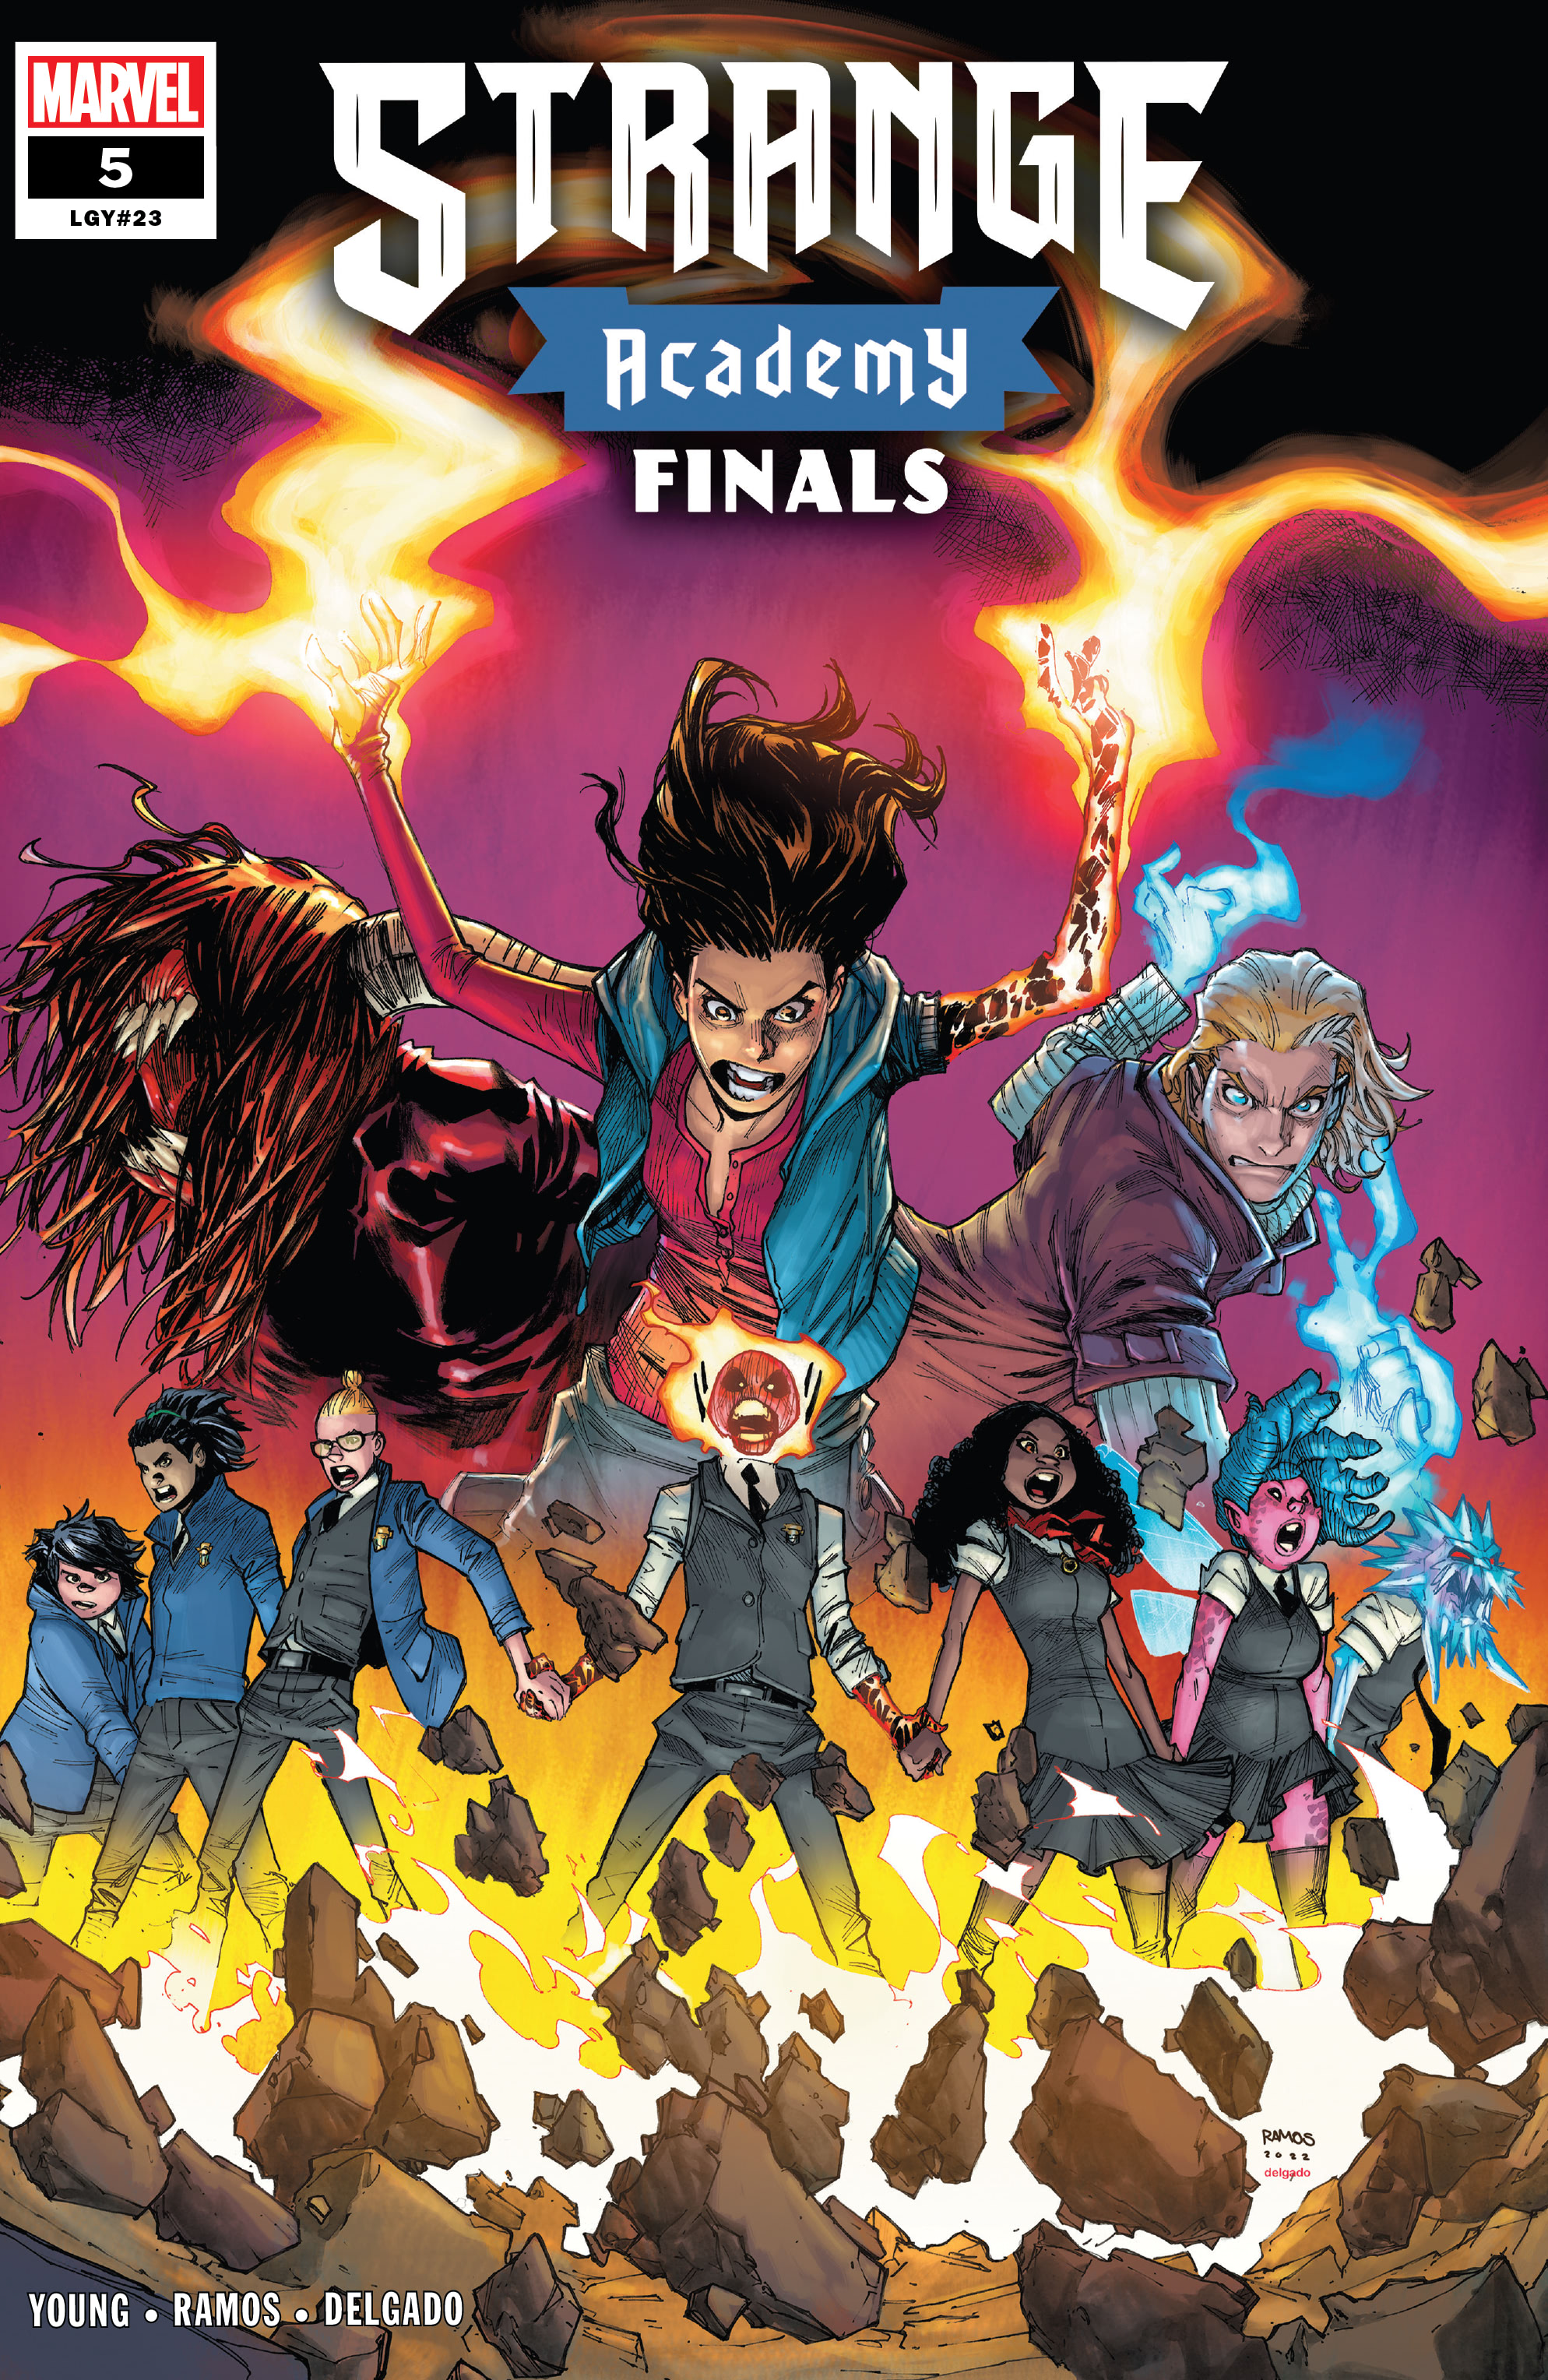 Read online Strange Academy: Finals comic -  Issue #5 - 1